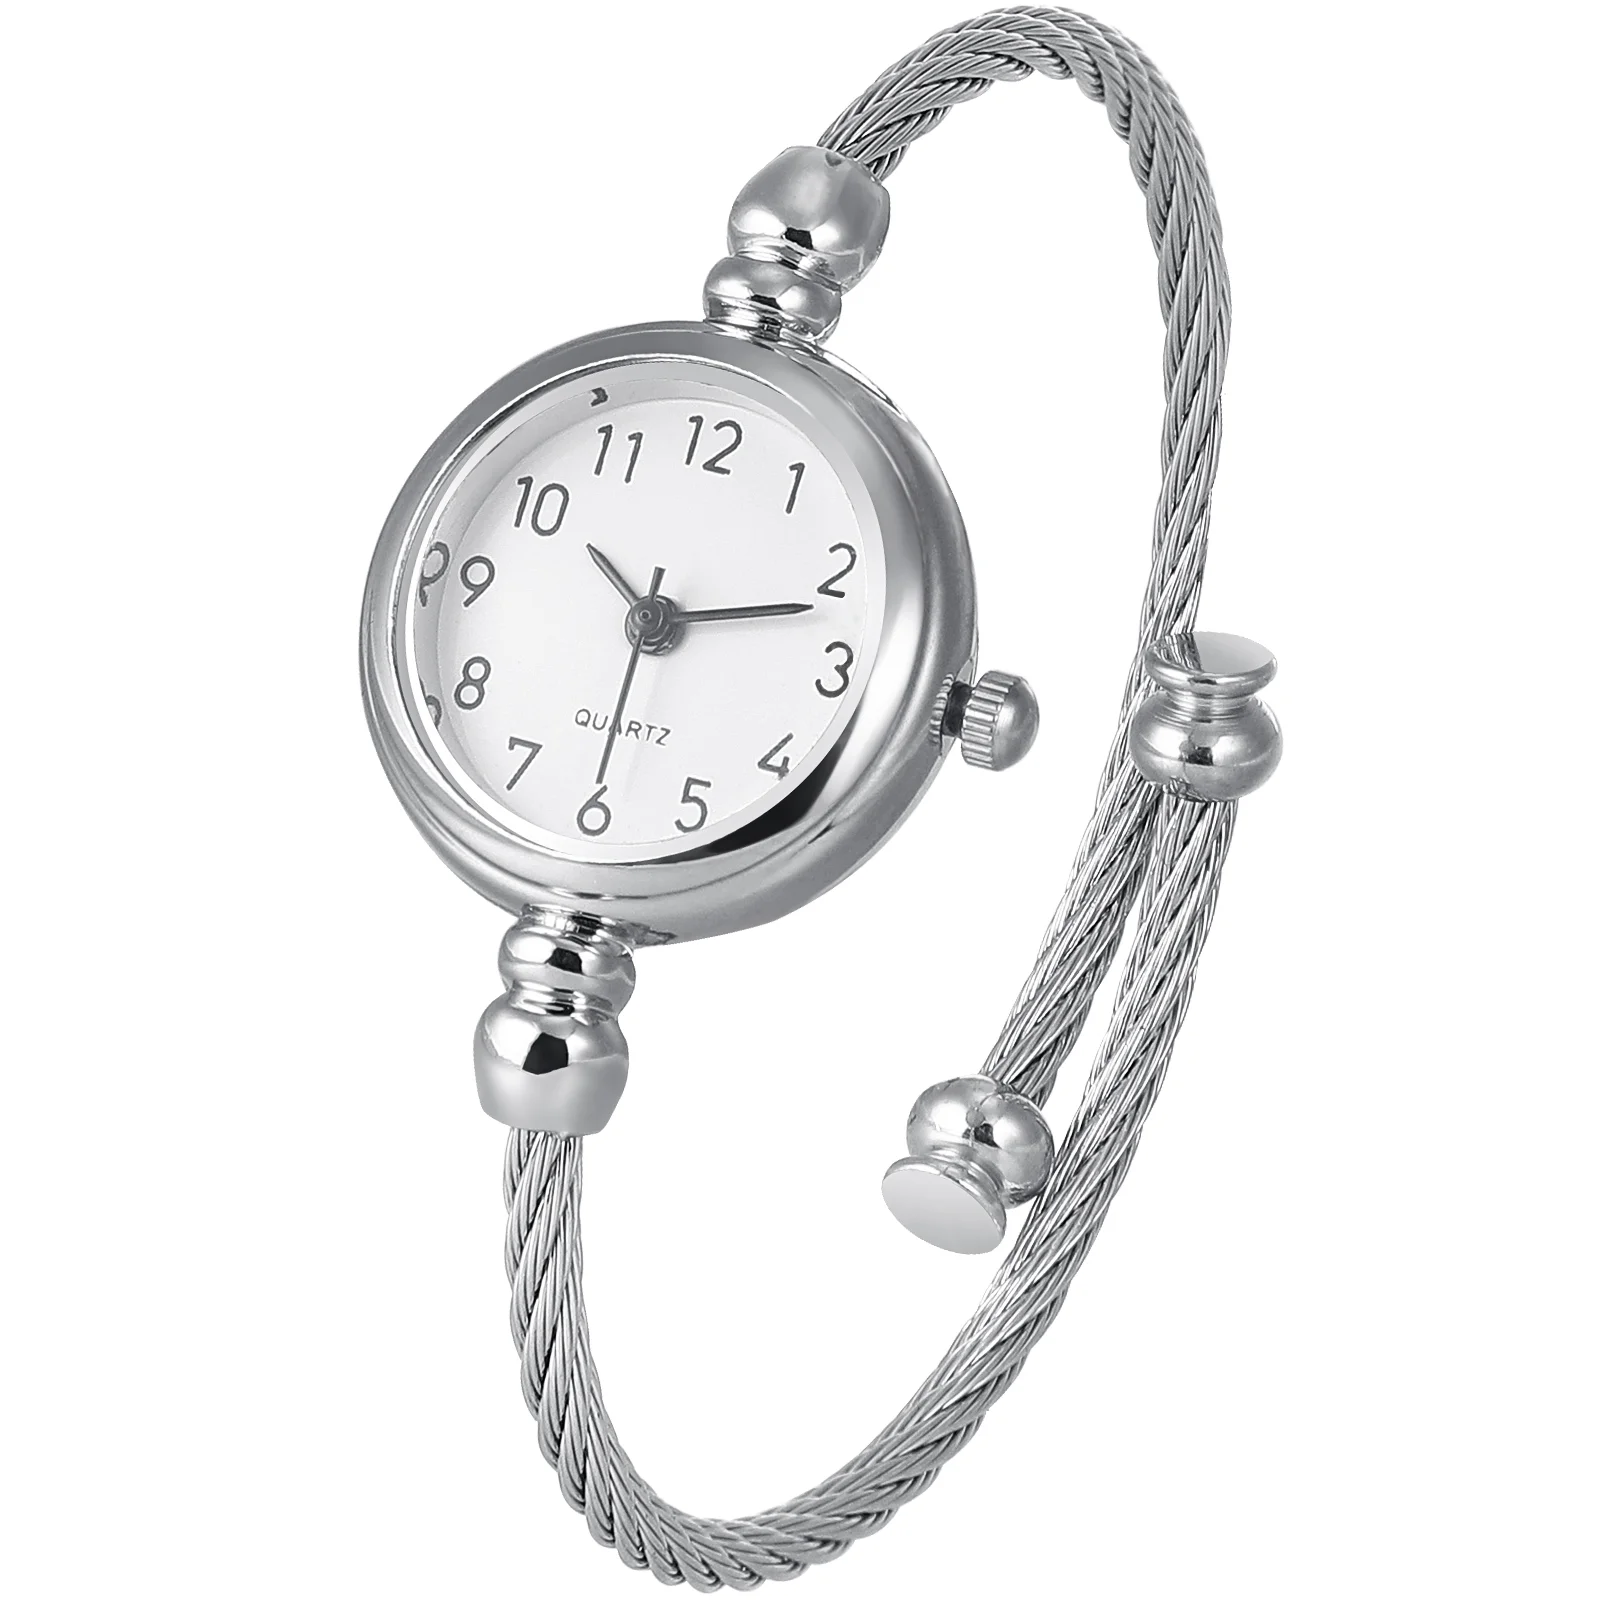 

Nicerio Womens Jewelry Bracelet Cuff Watches Women Bangle Cuff Wrist Bracelet Watch Stainless Steel Wire Band Dress